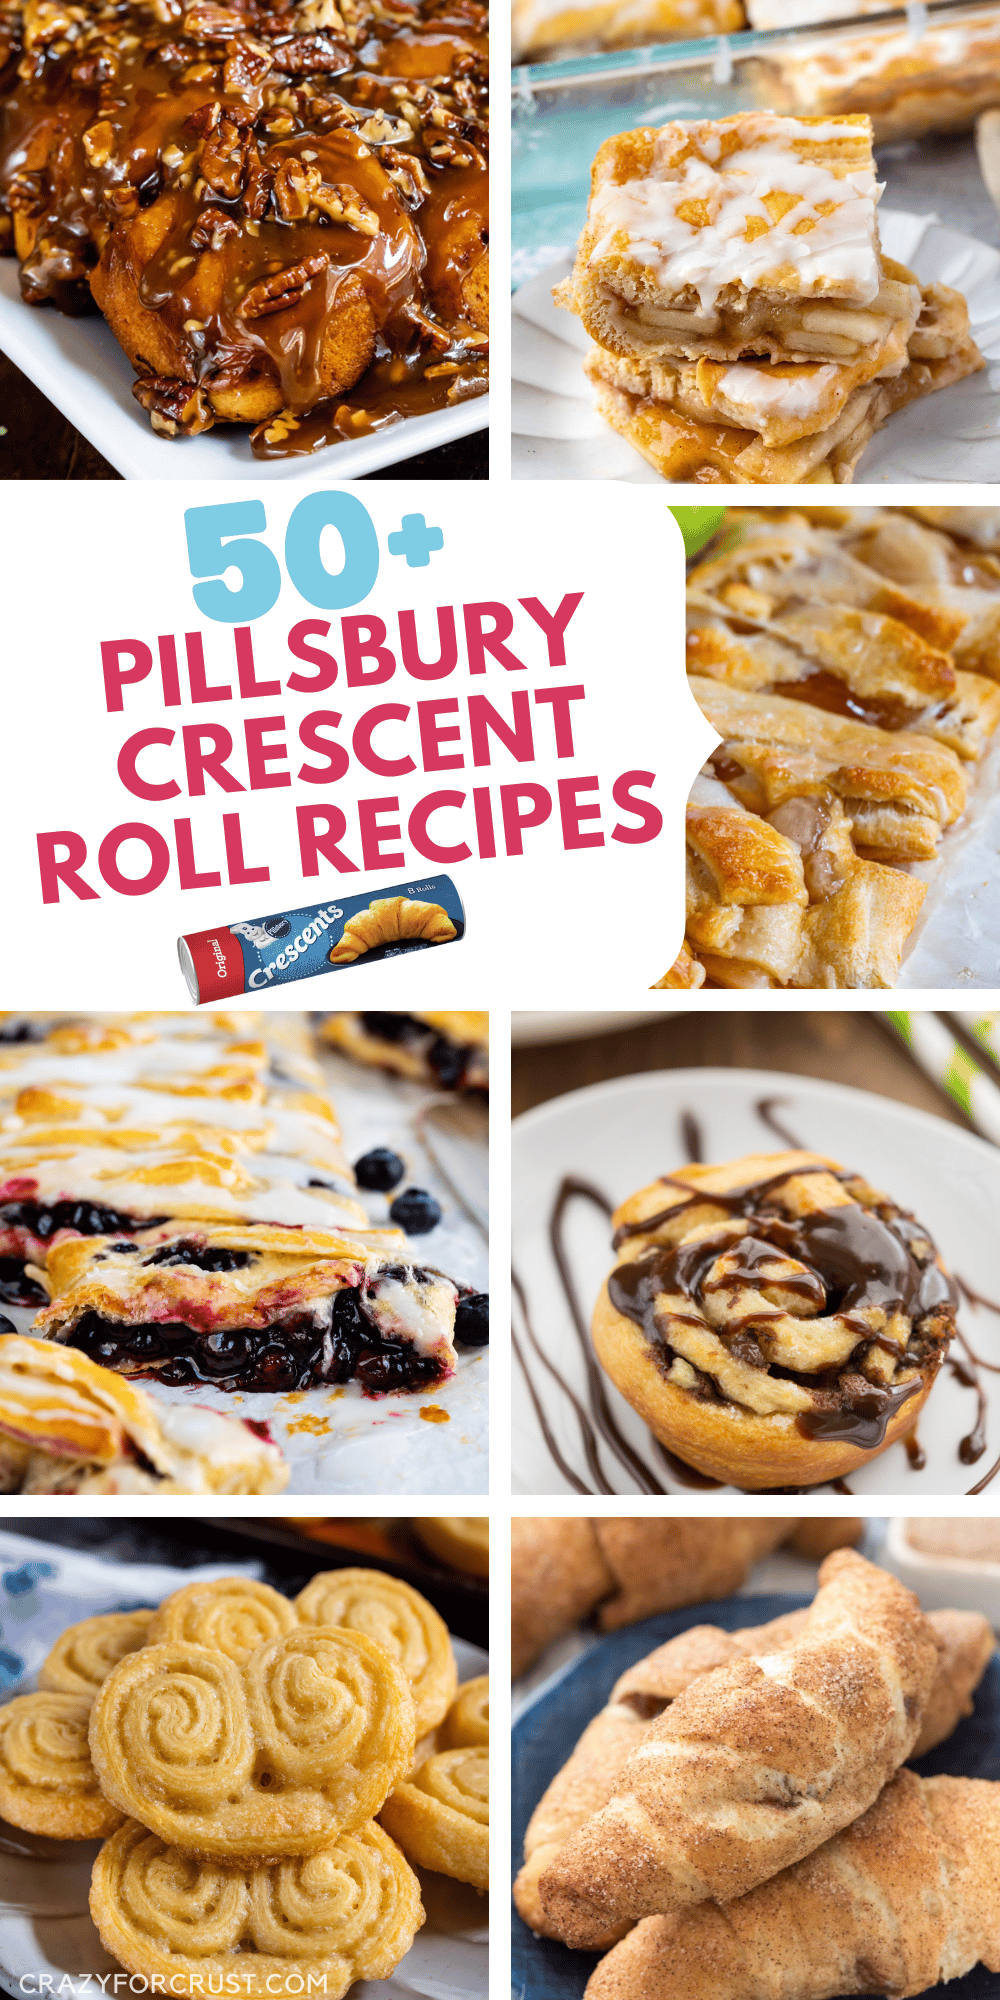 Breakfast & Dessert with Pillsbury Crescent Rolls - Crazy for Crust